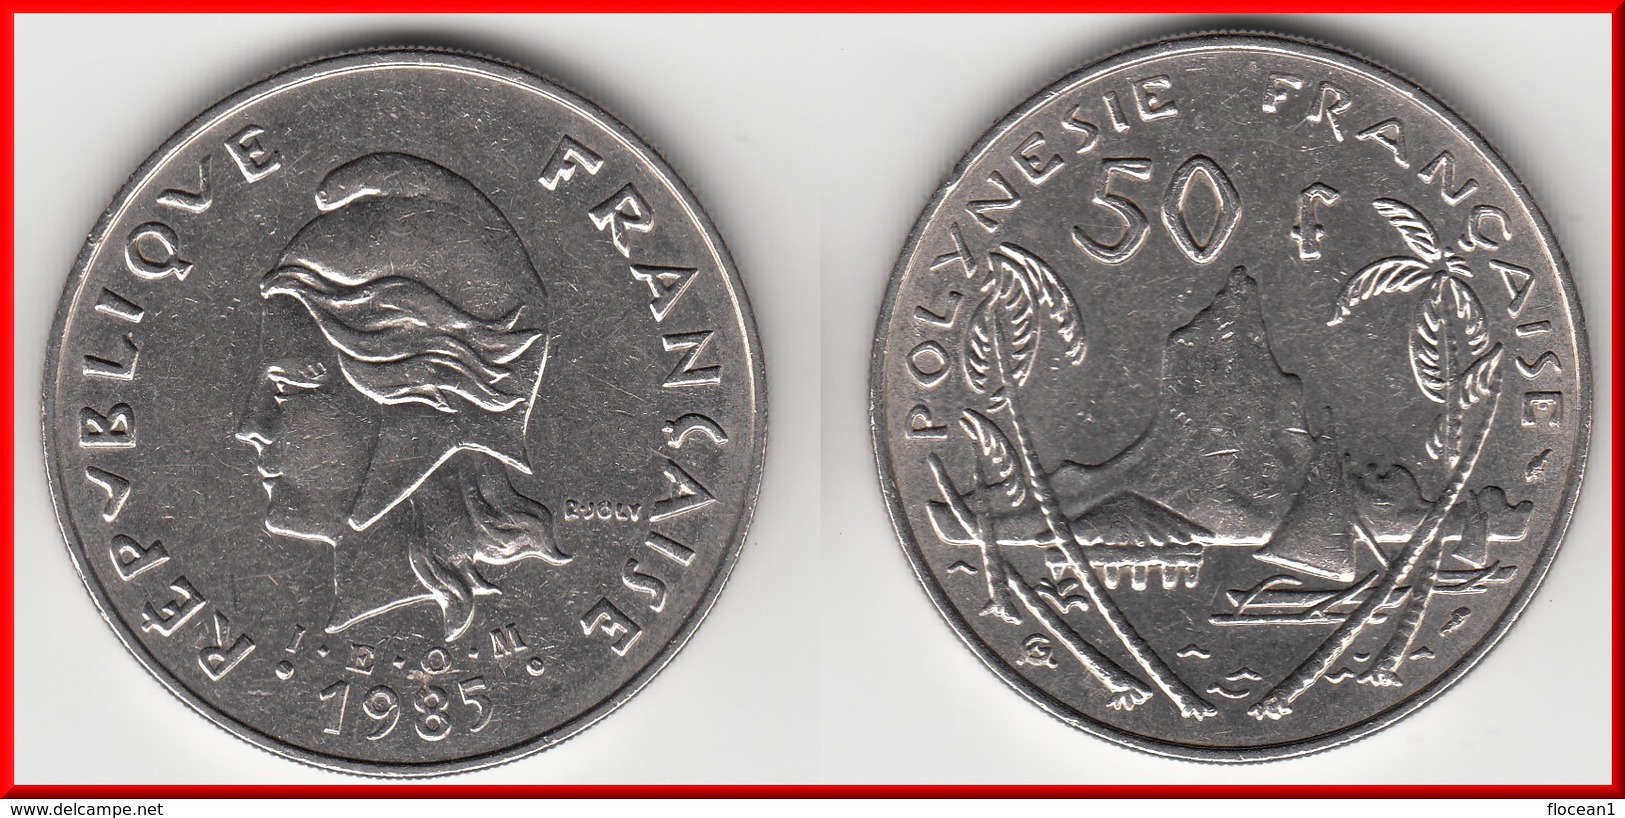 **** POLYNESIE FRANCAISE- FRENCH POLYNESIA - 50 FRANCS 1985 **** EN ACHAT IMMEDIAT !!! - Polynésie Française